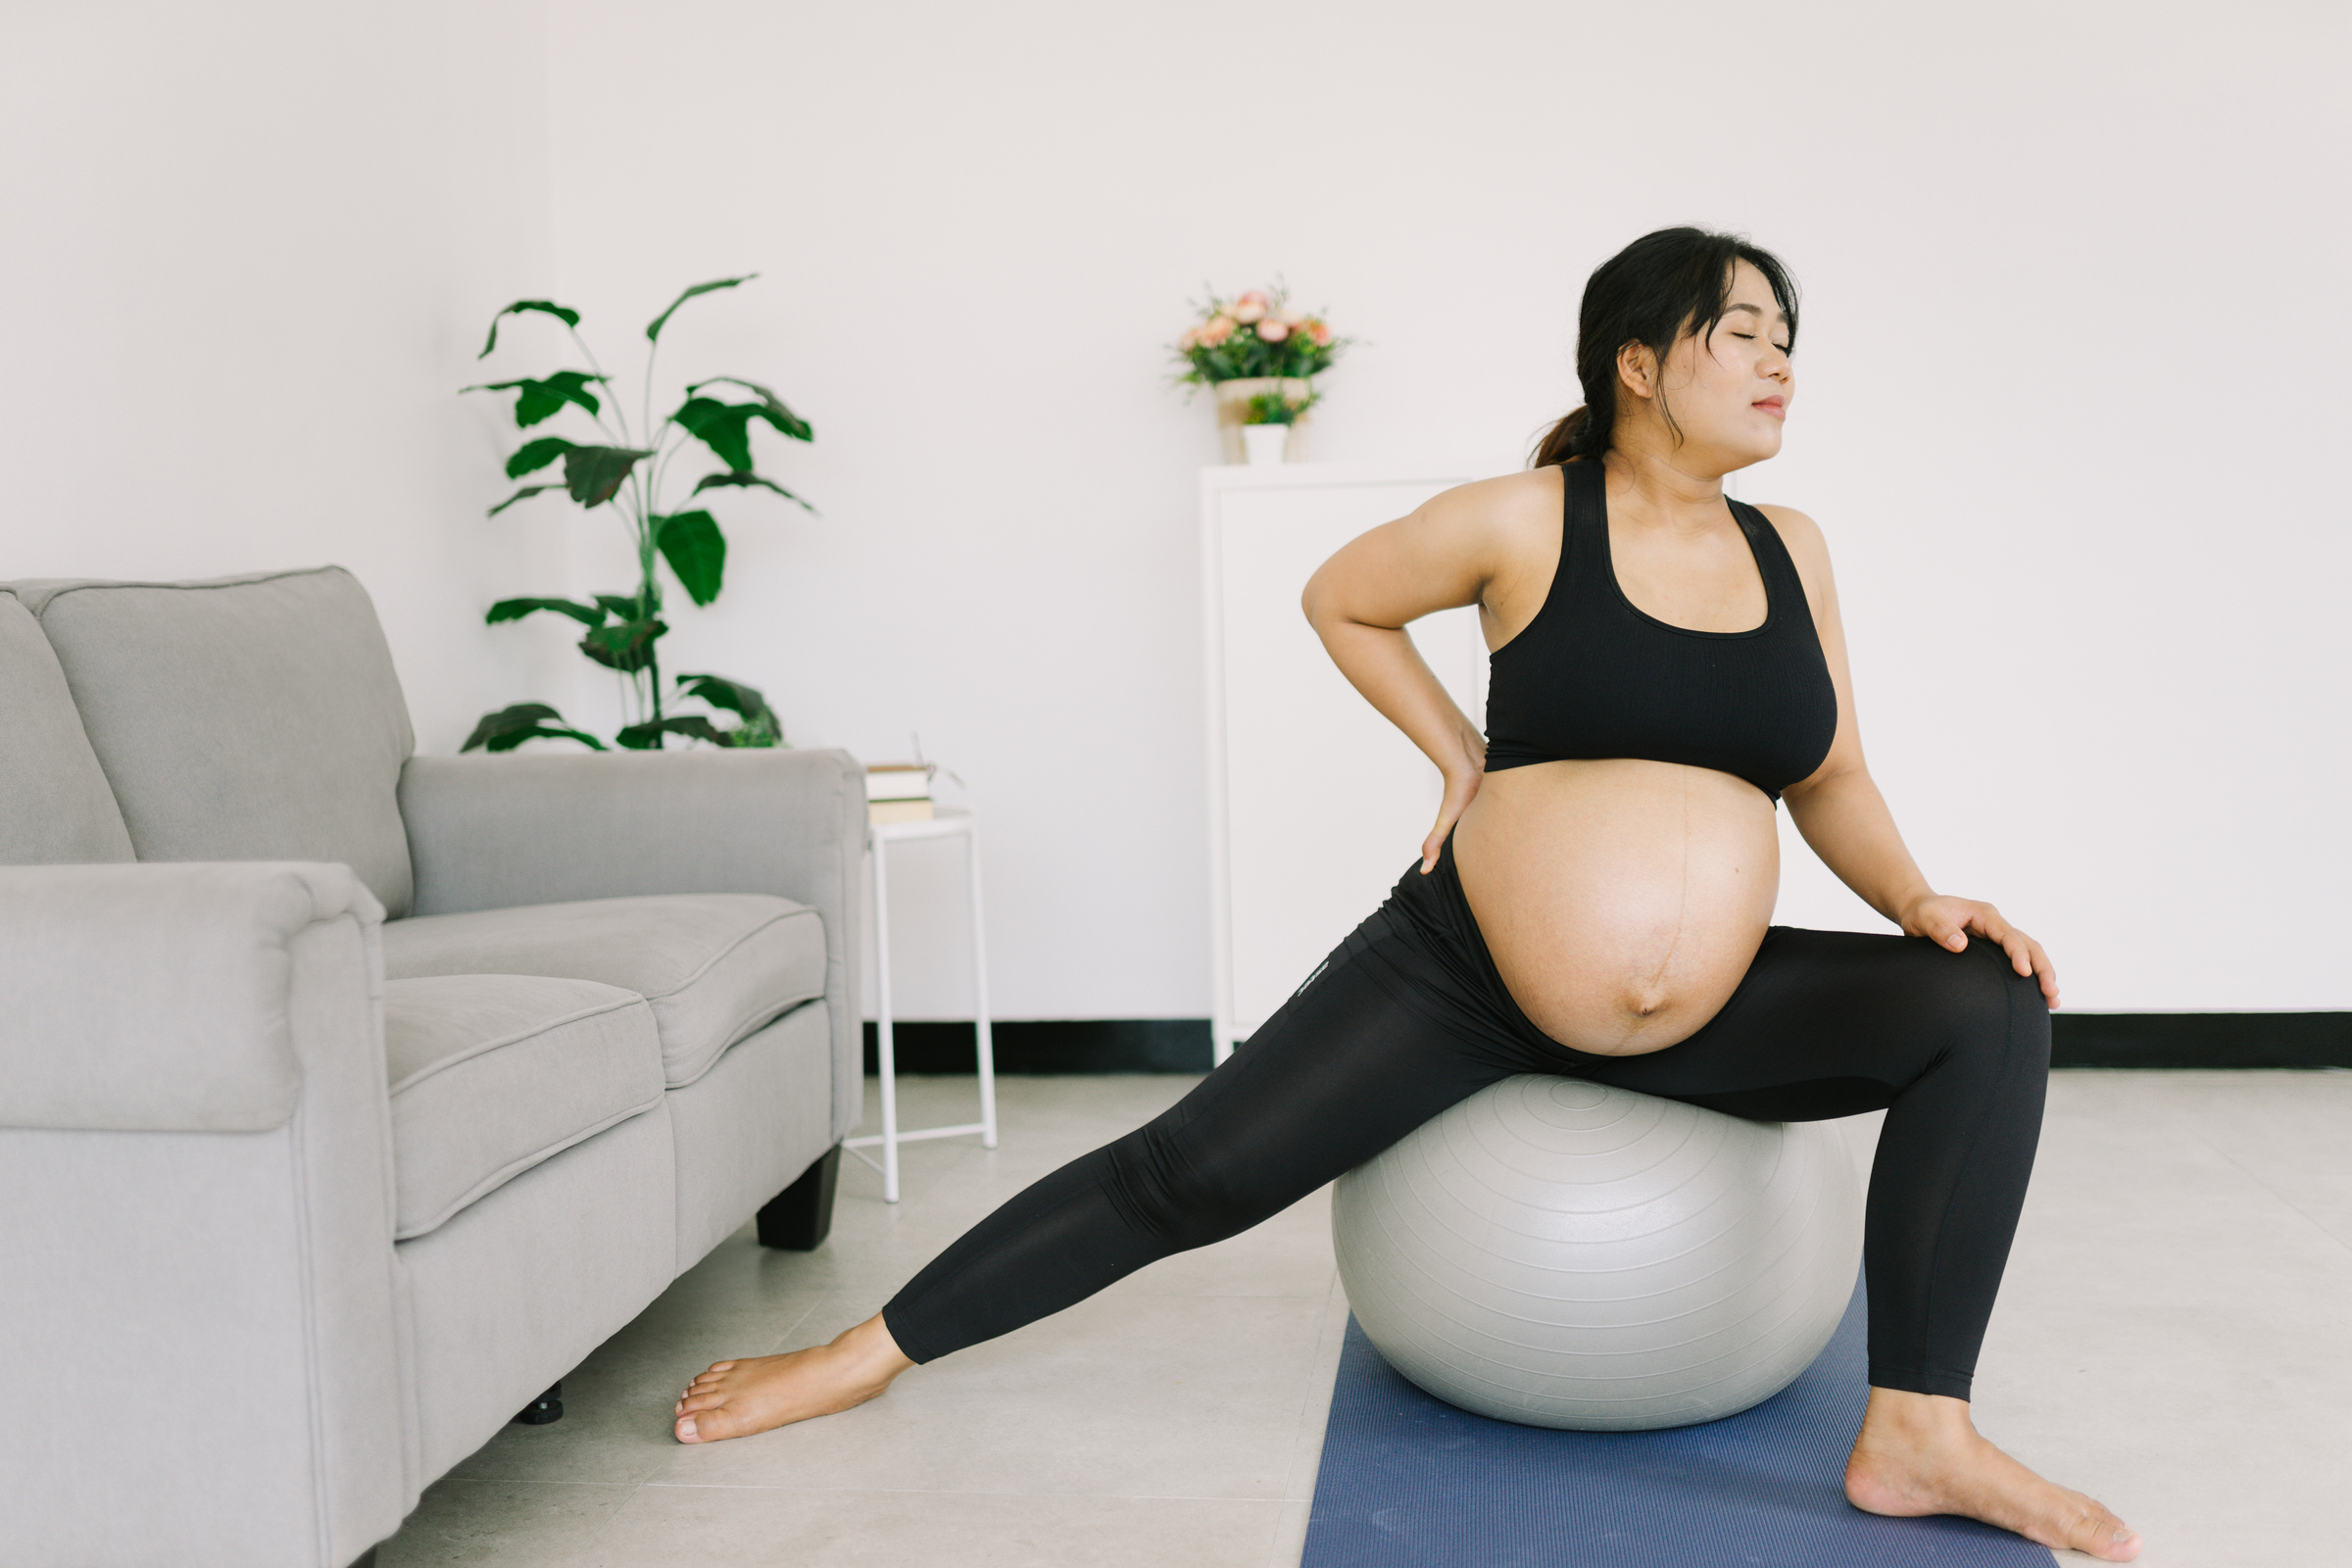 Pregnant Woman Doing Yoga